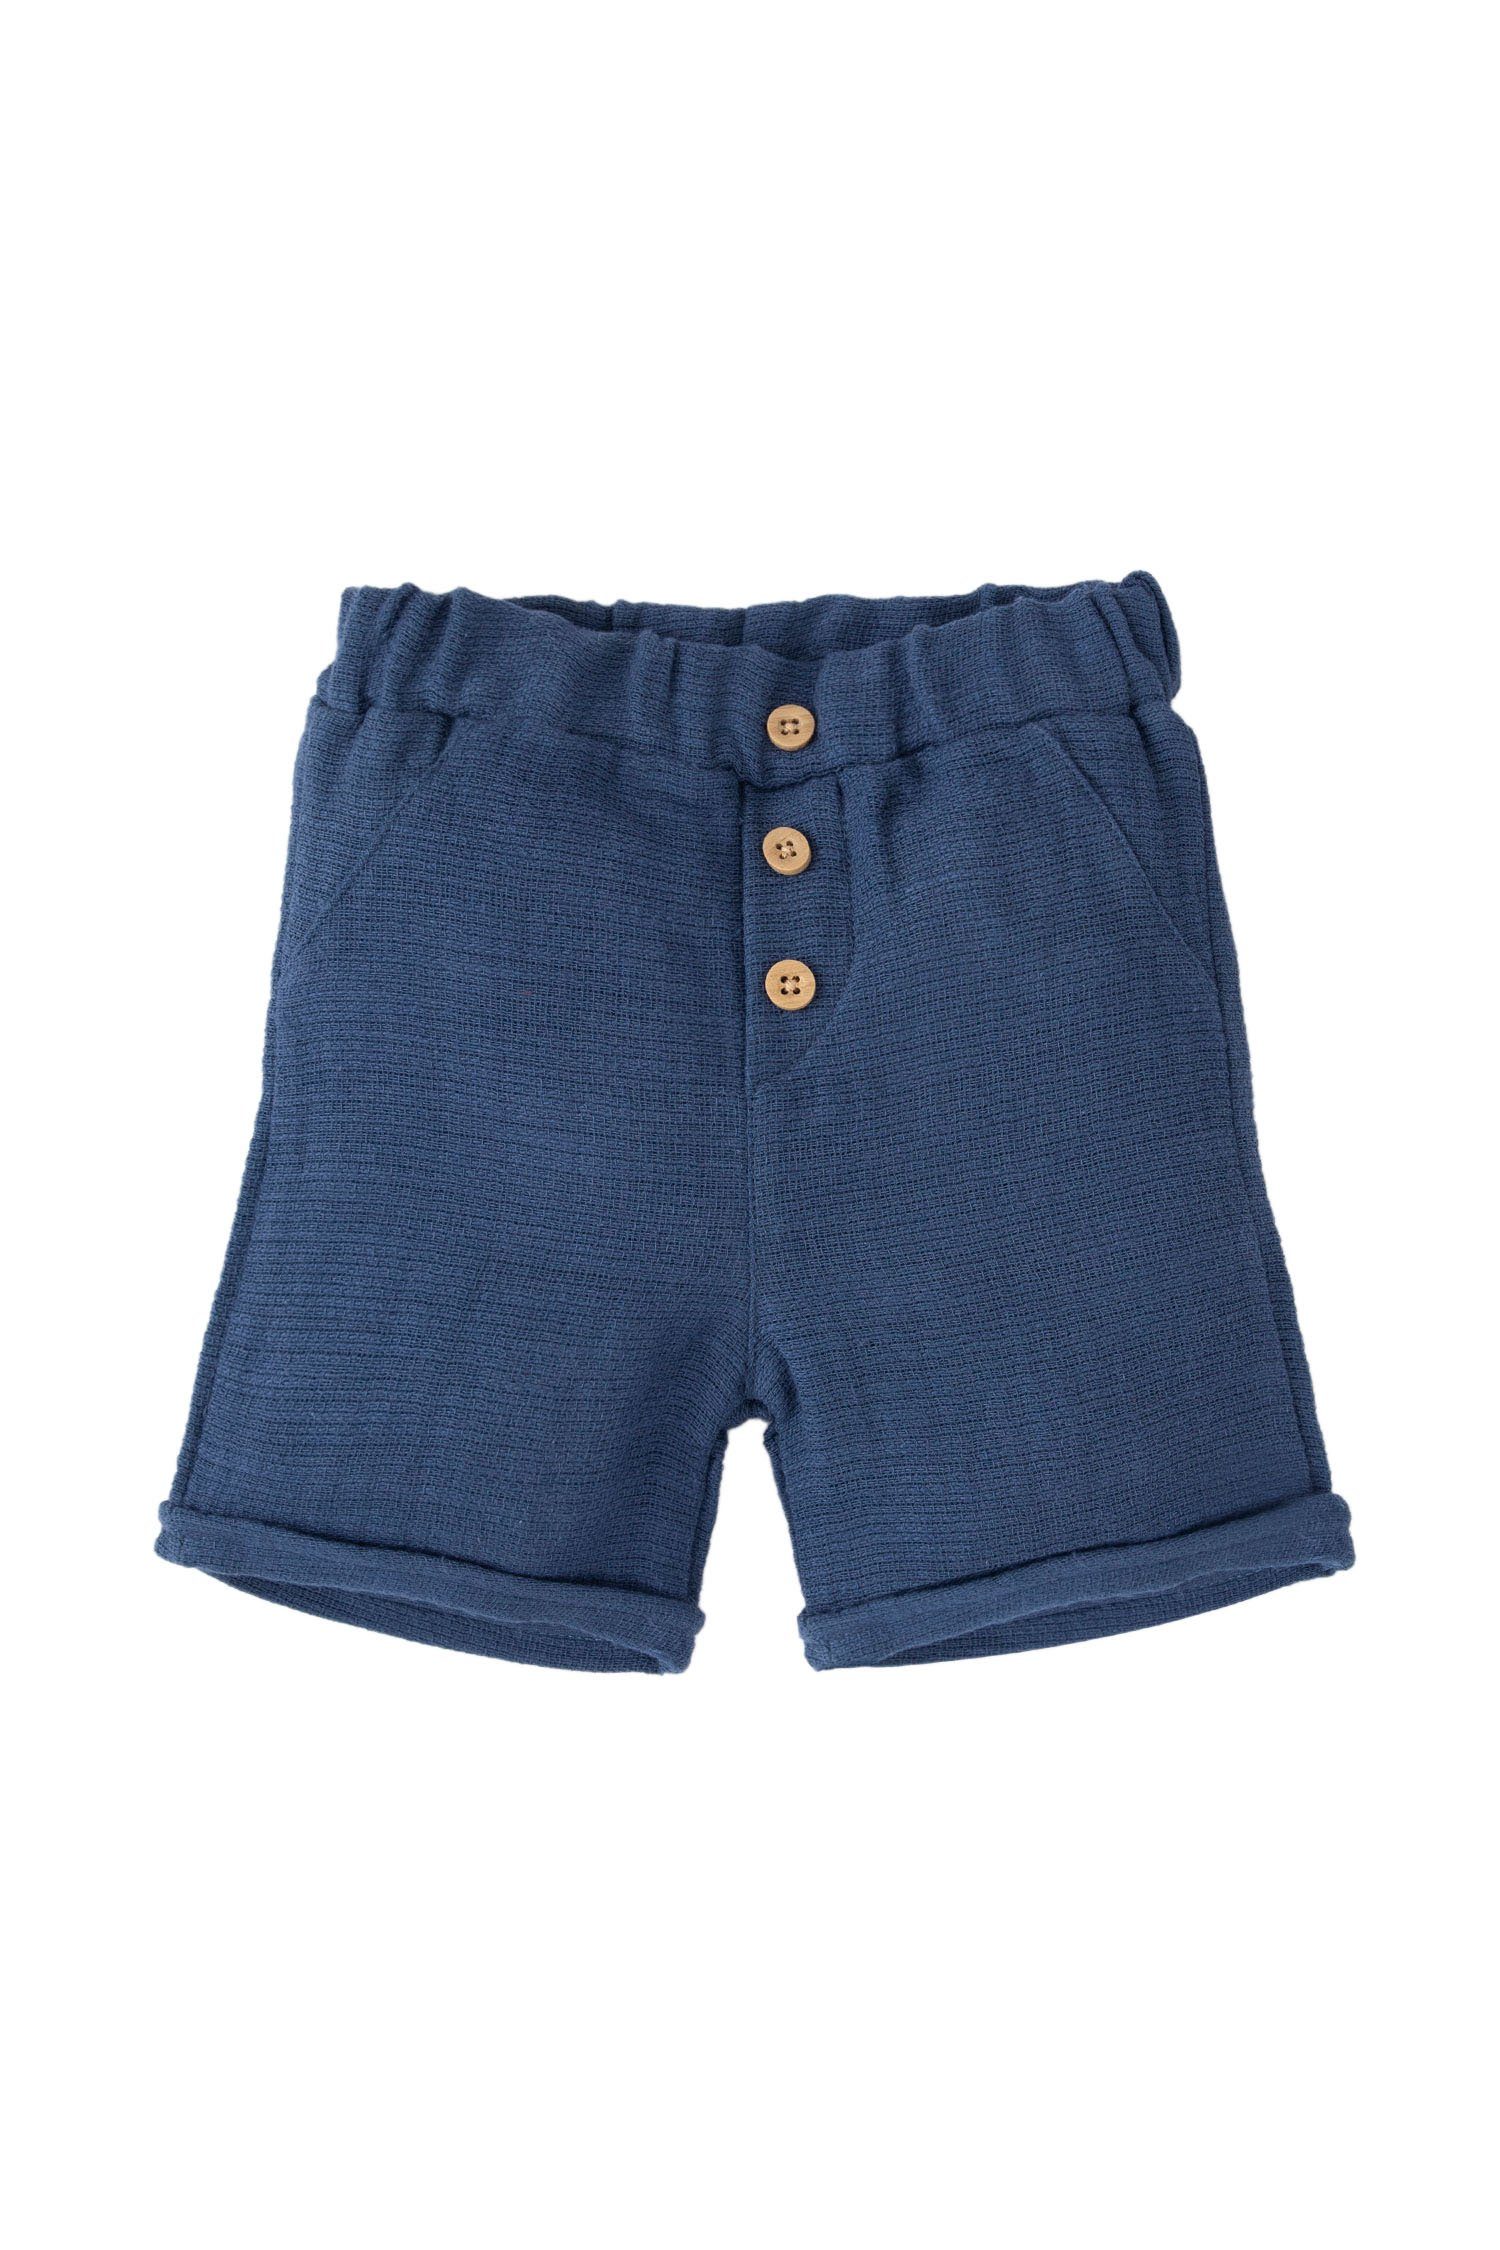 FIT DeFacto BabyBoy REGULAR Shorts Shorts